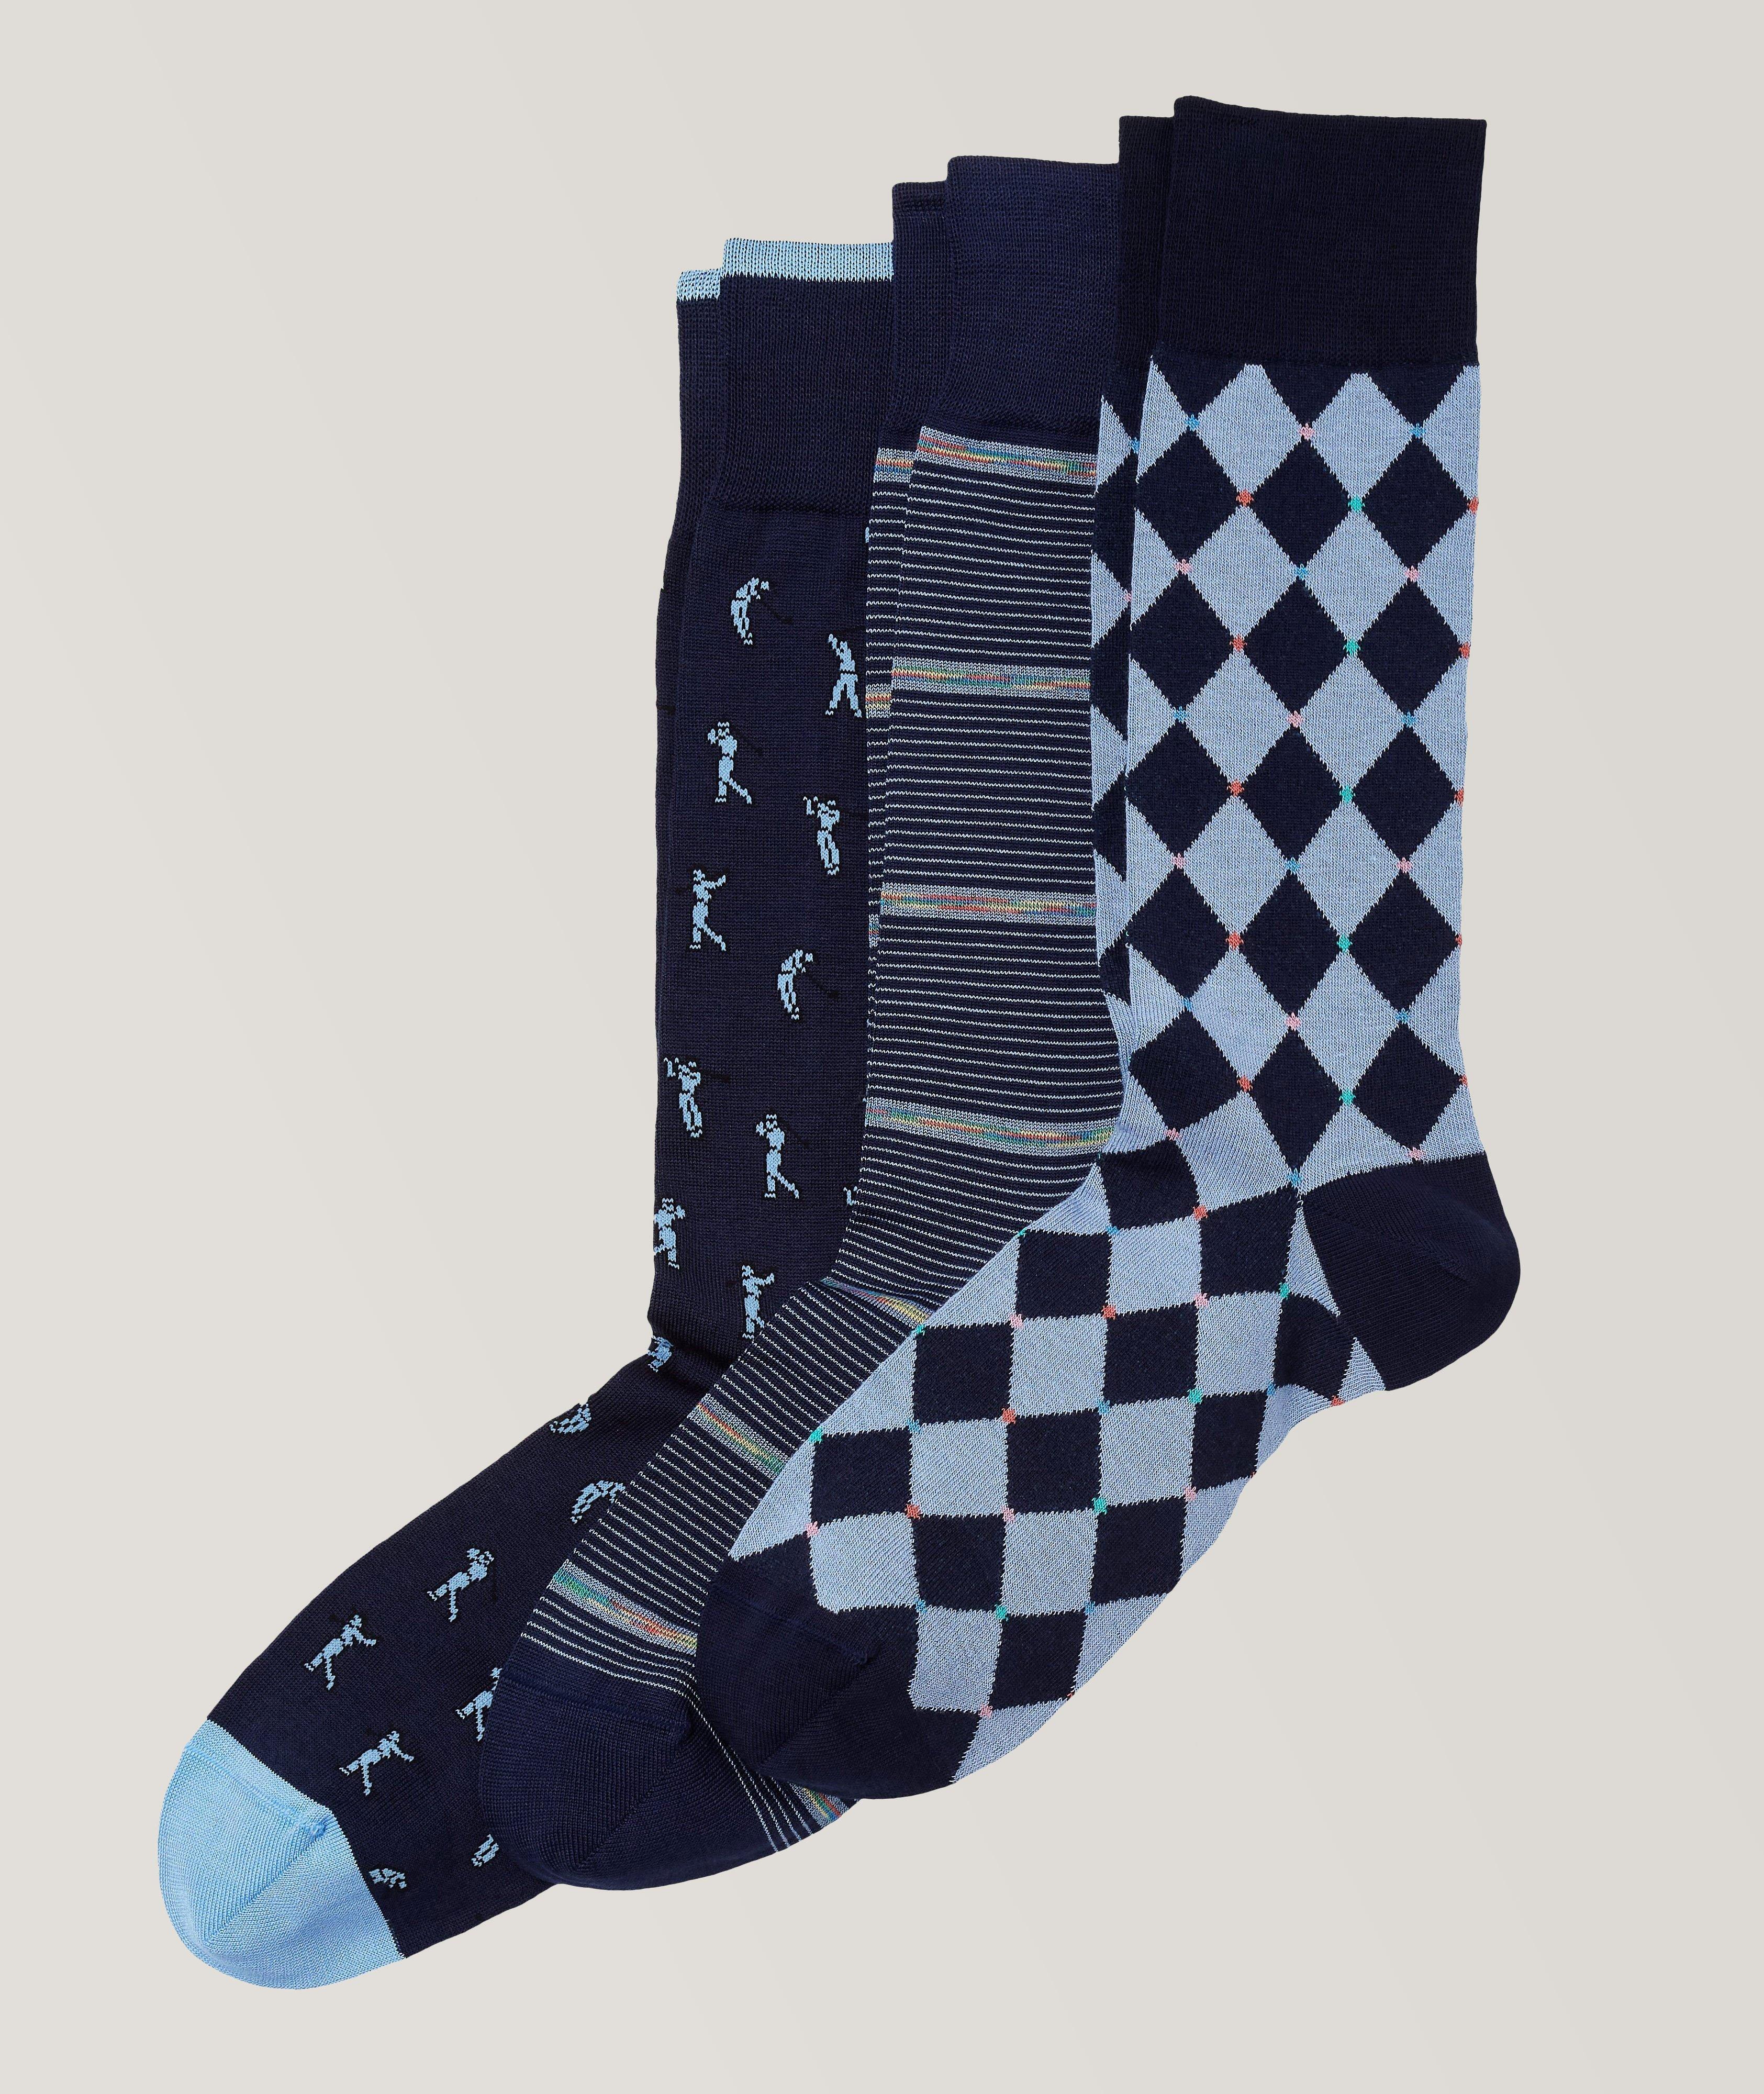 Three-Pack Patterned Cotton-Blend Socks image 0